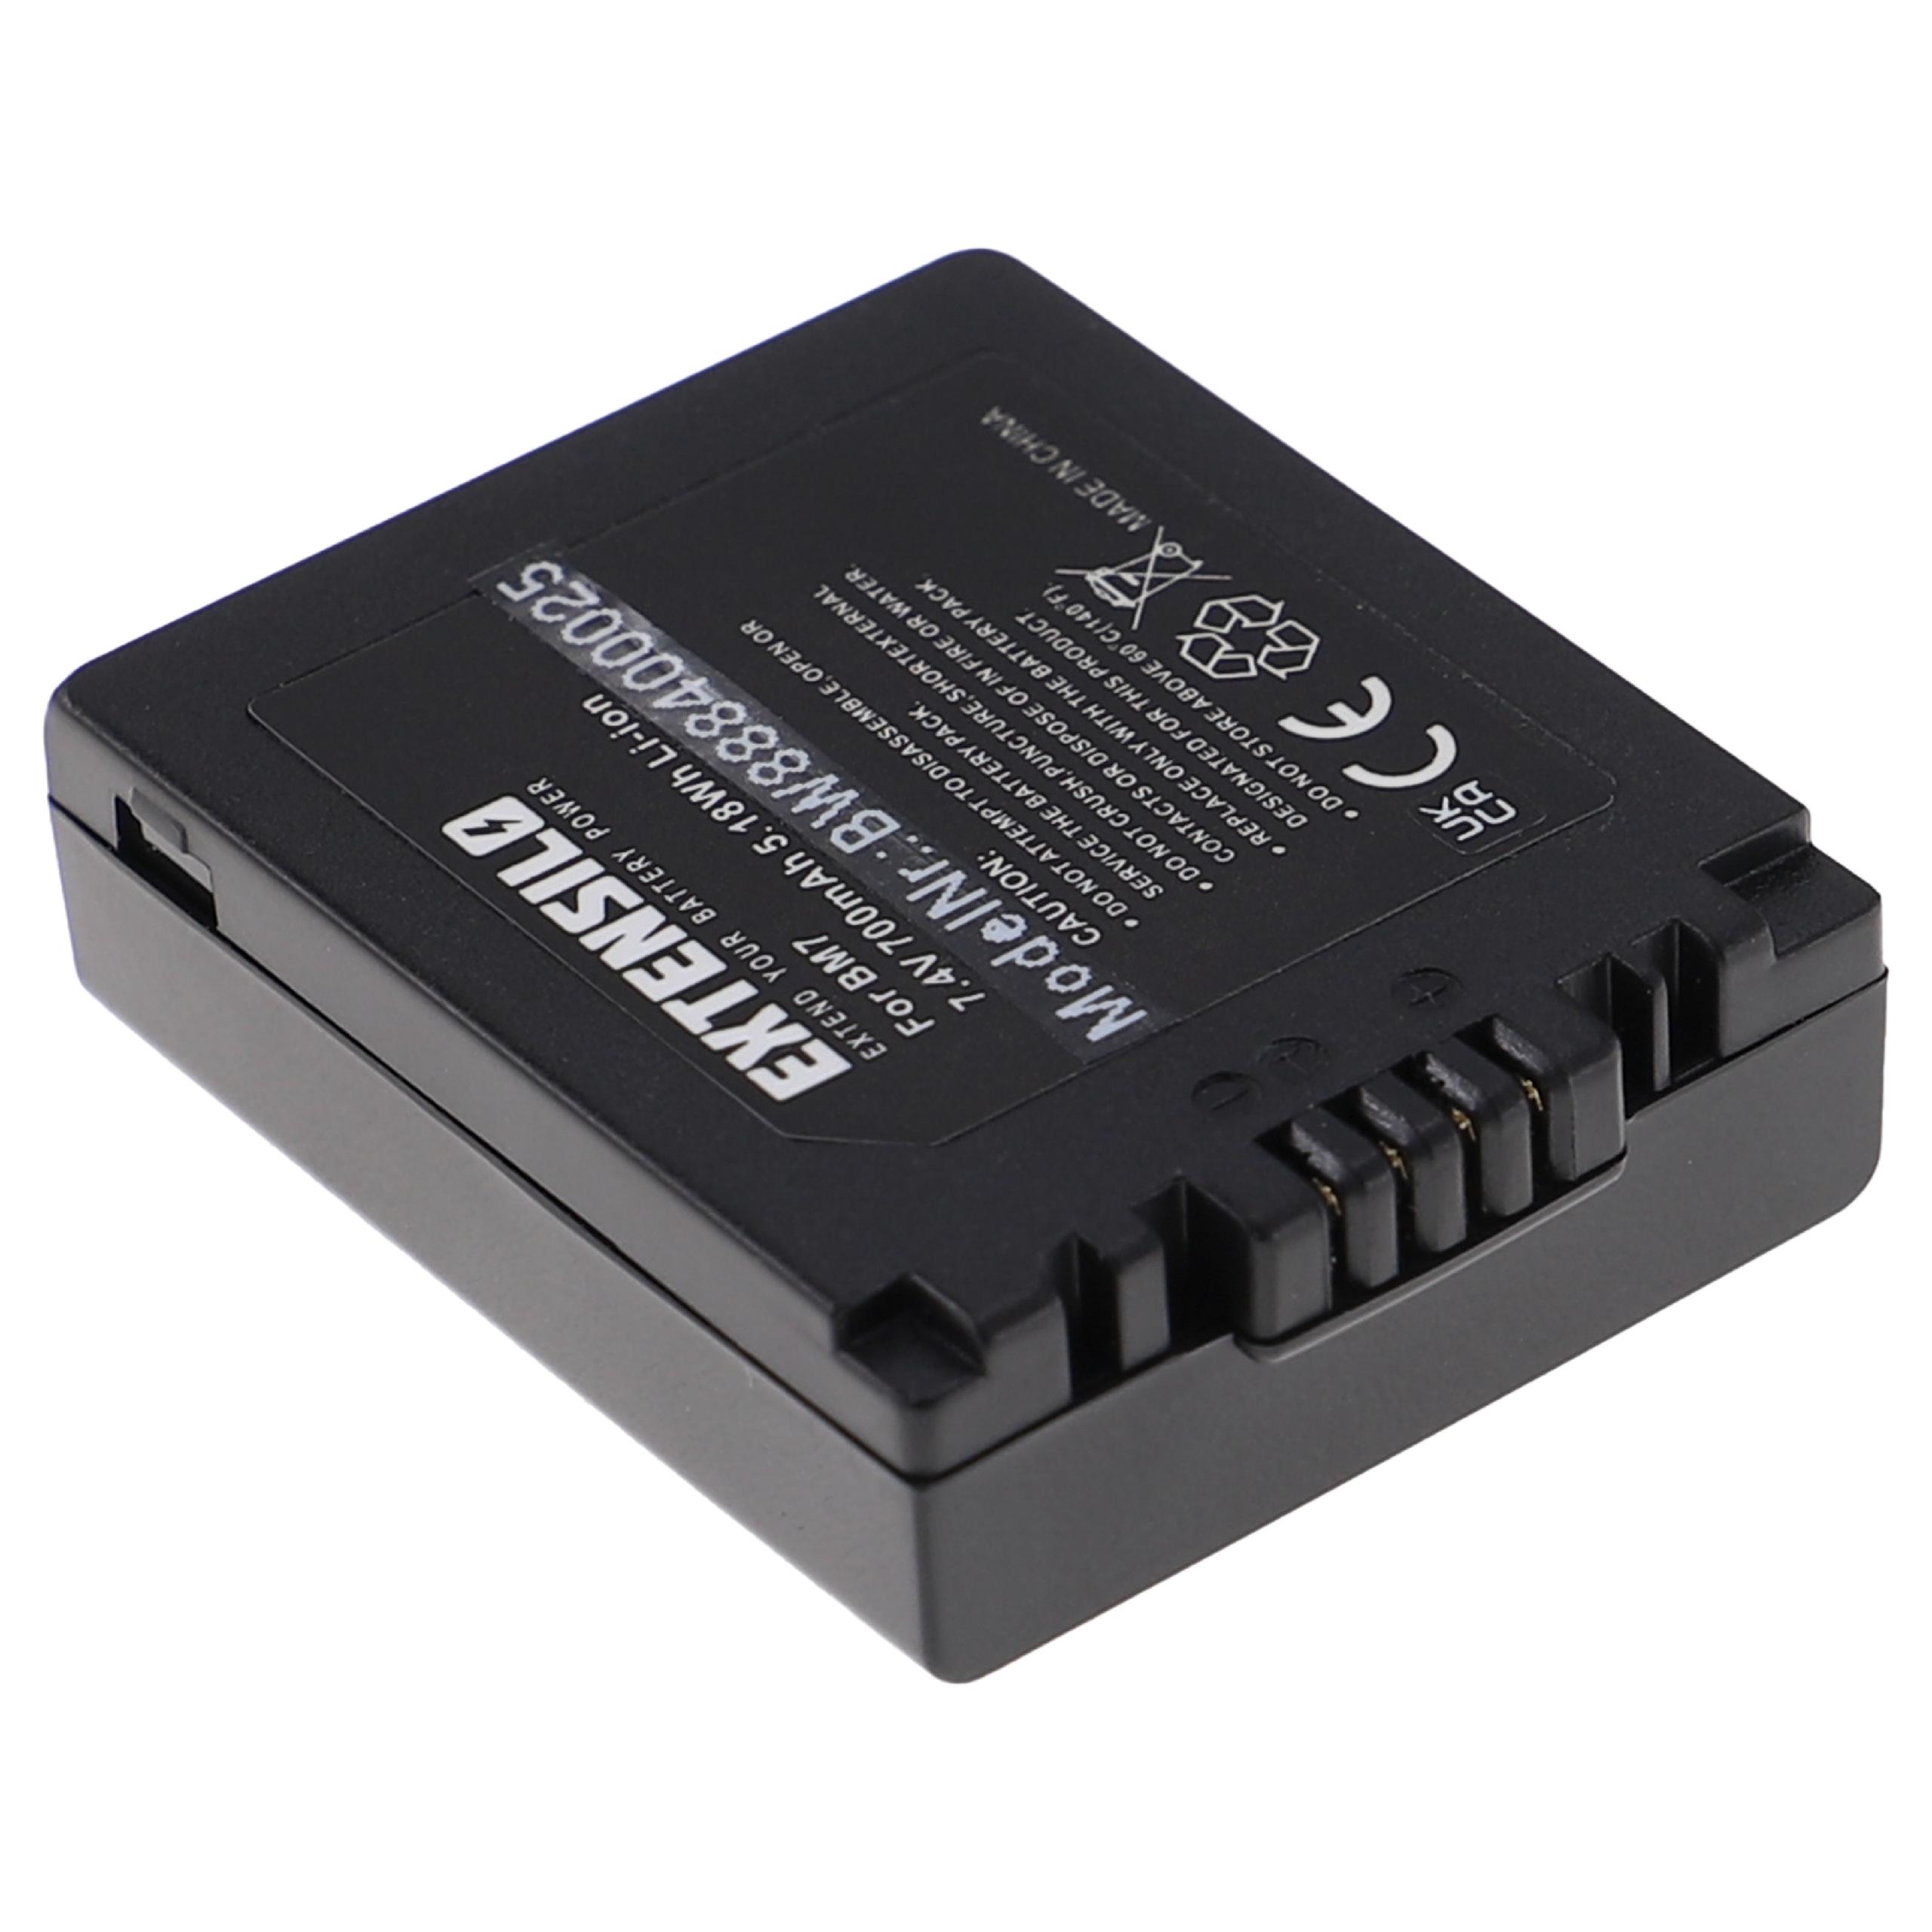 Akumulator do aparatu cyfrowego zamiennik Panasonic CGA-S002A/1B, CGA-S002E/1B - 700 mAh 7,4 V Li-Ion